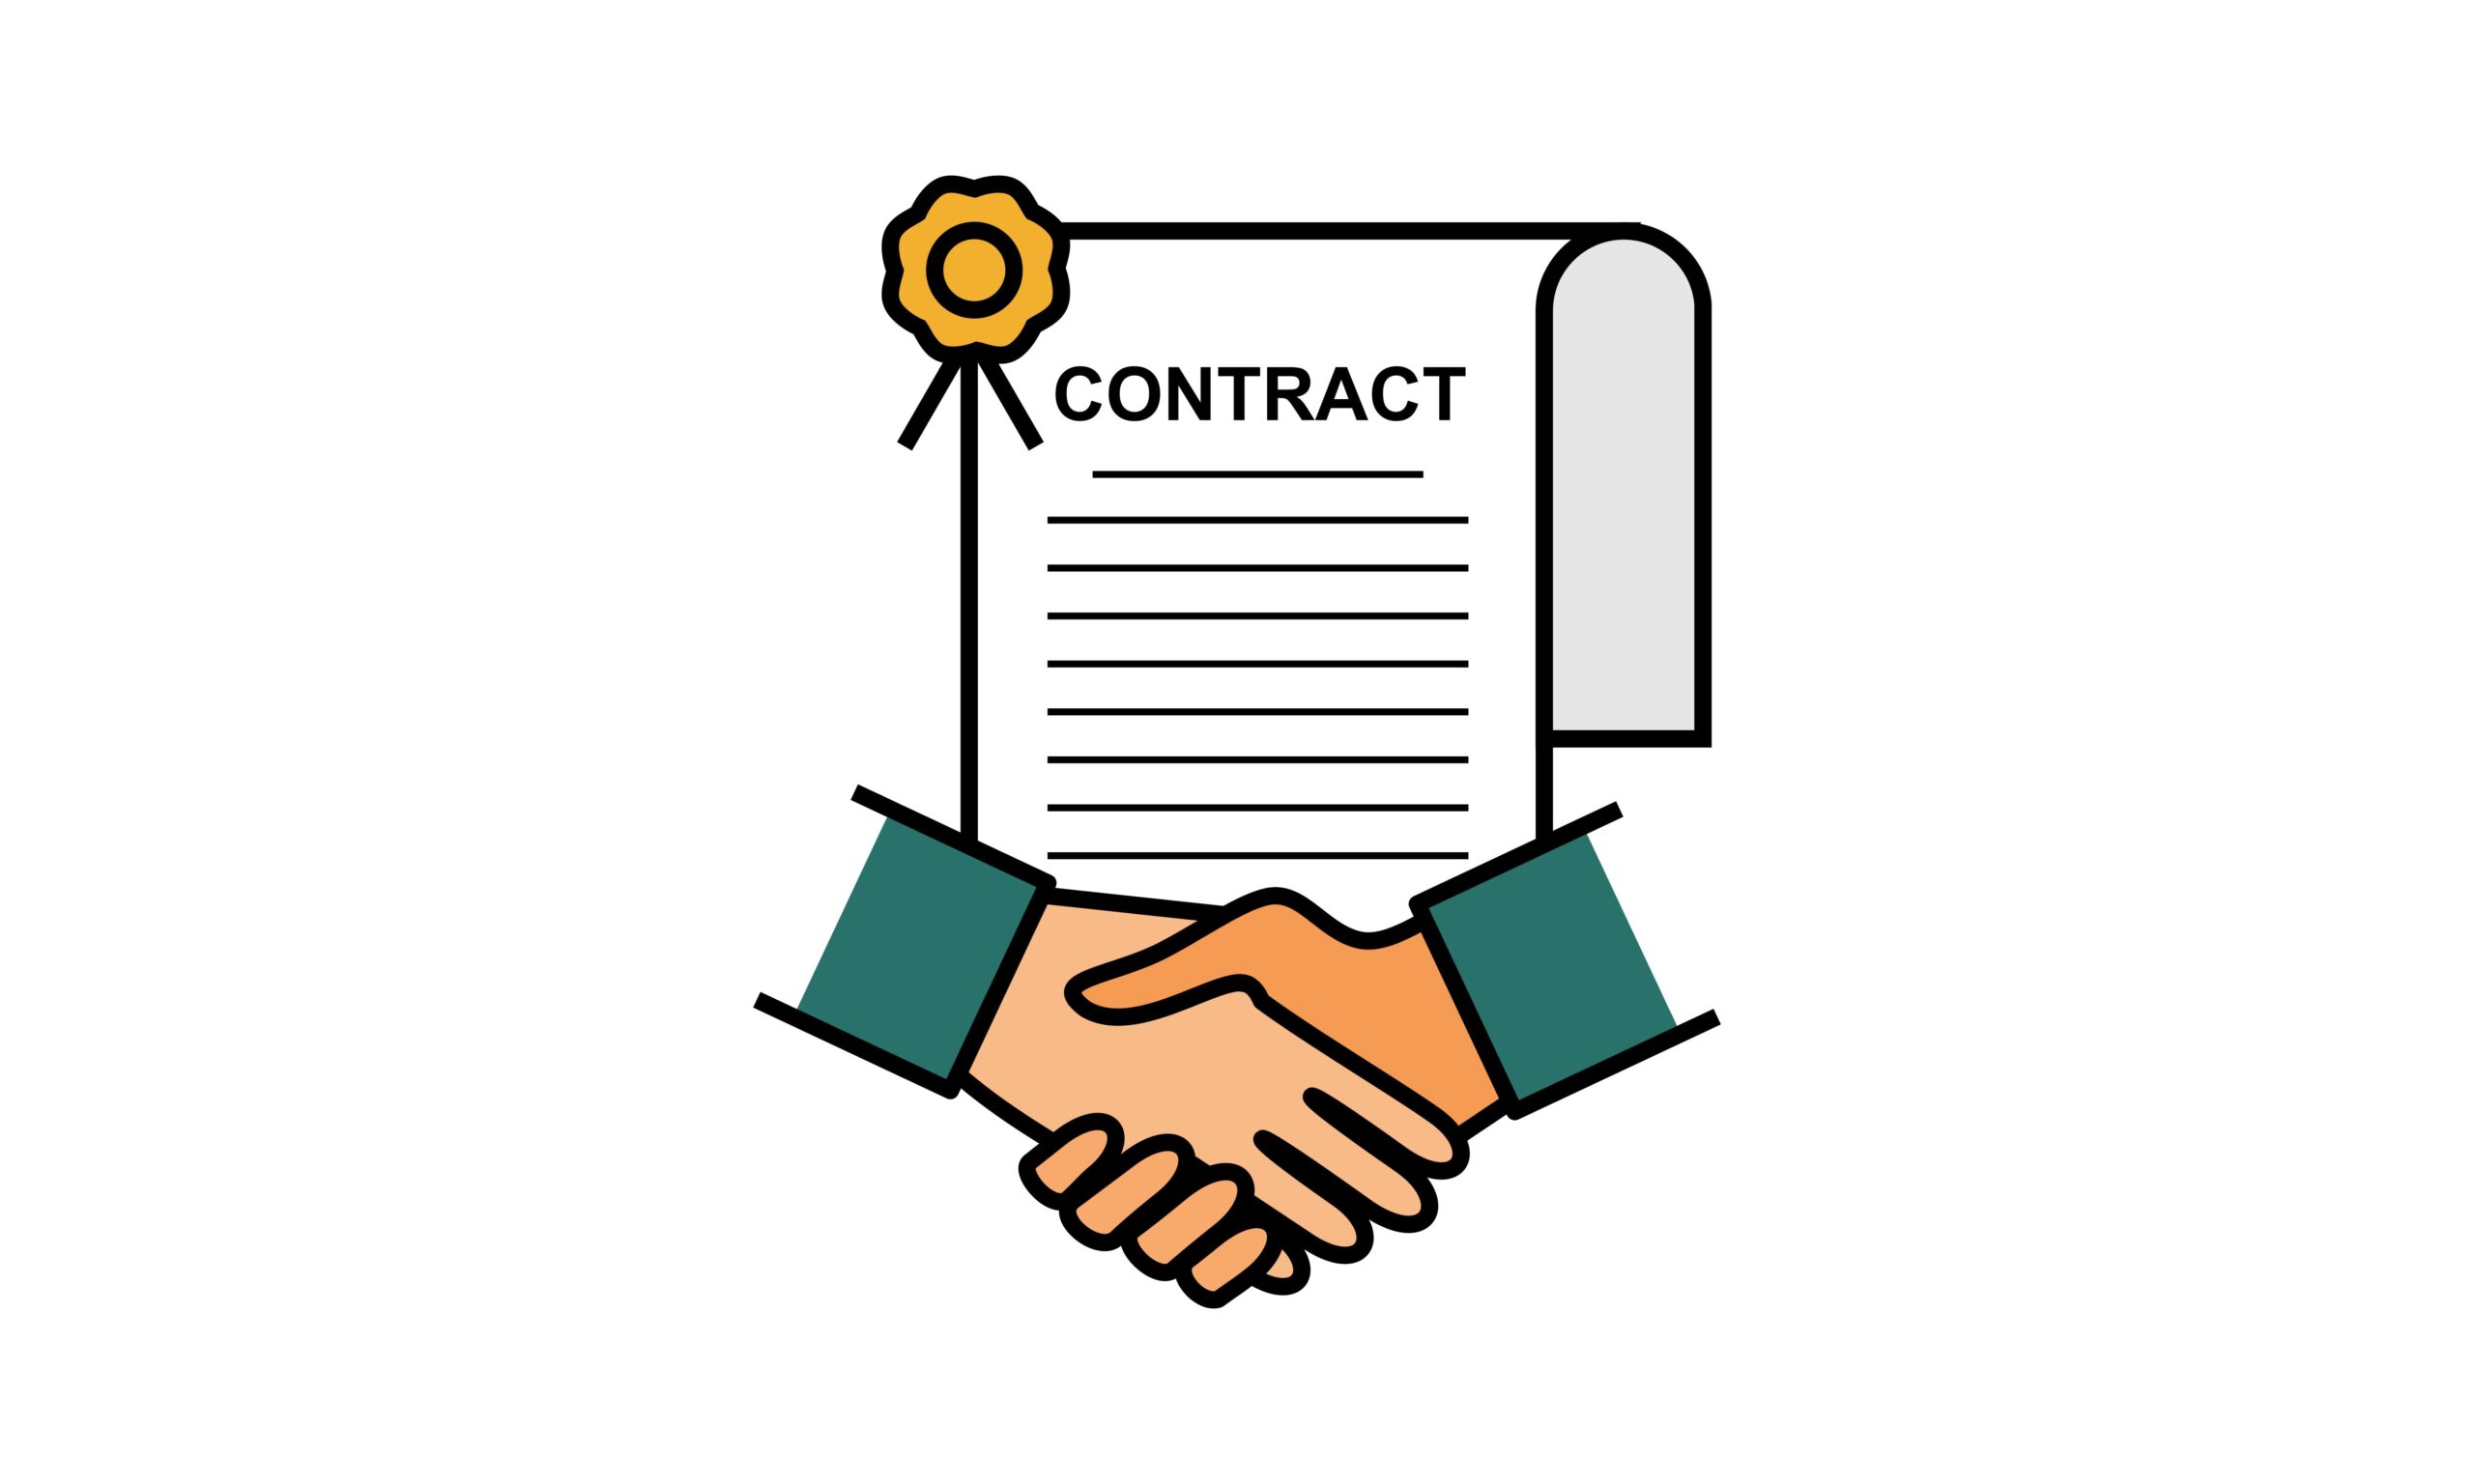 Handshake-for-business-agreement-logo-Graphics-4567249-1